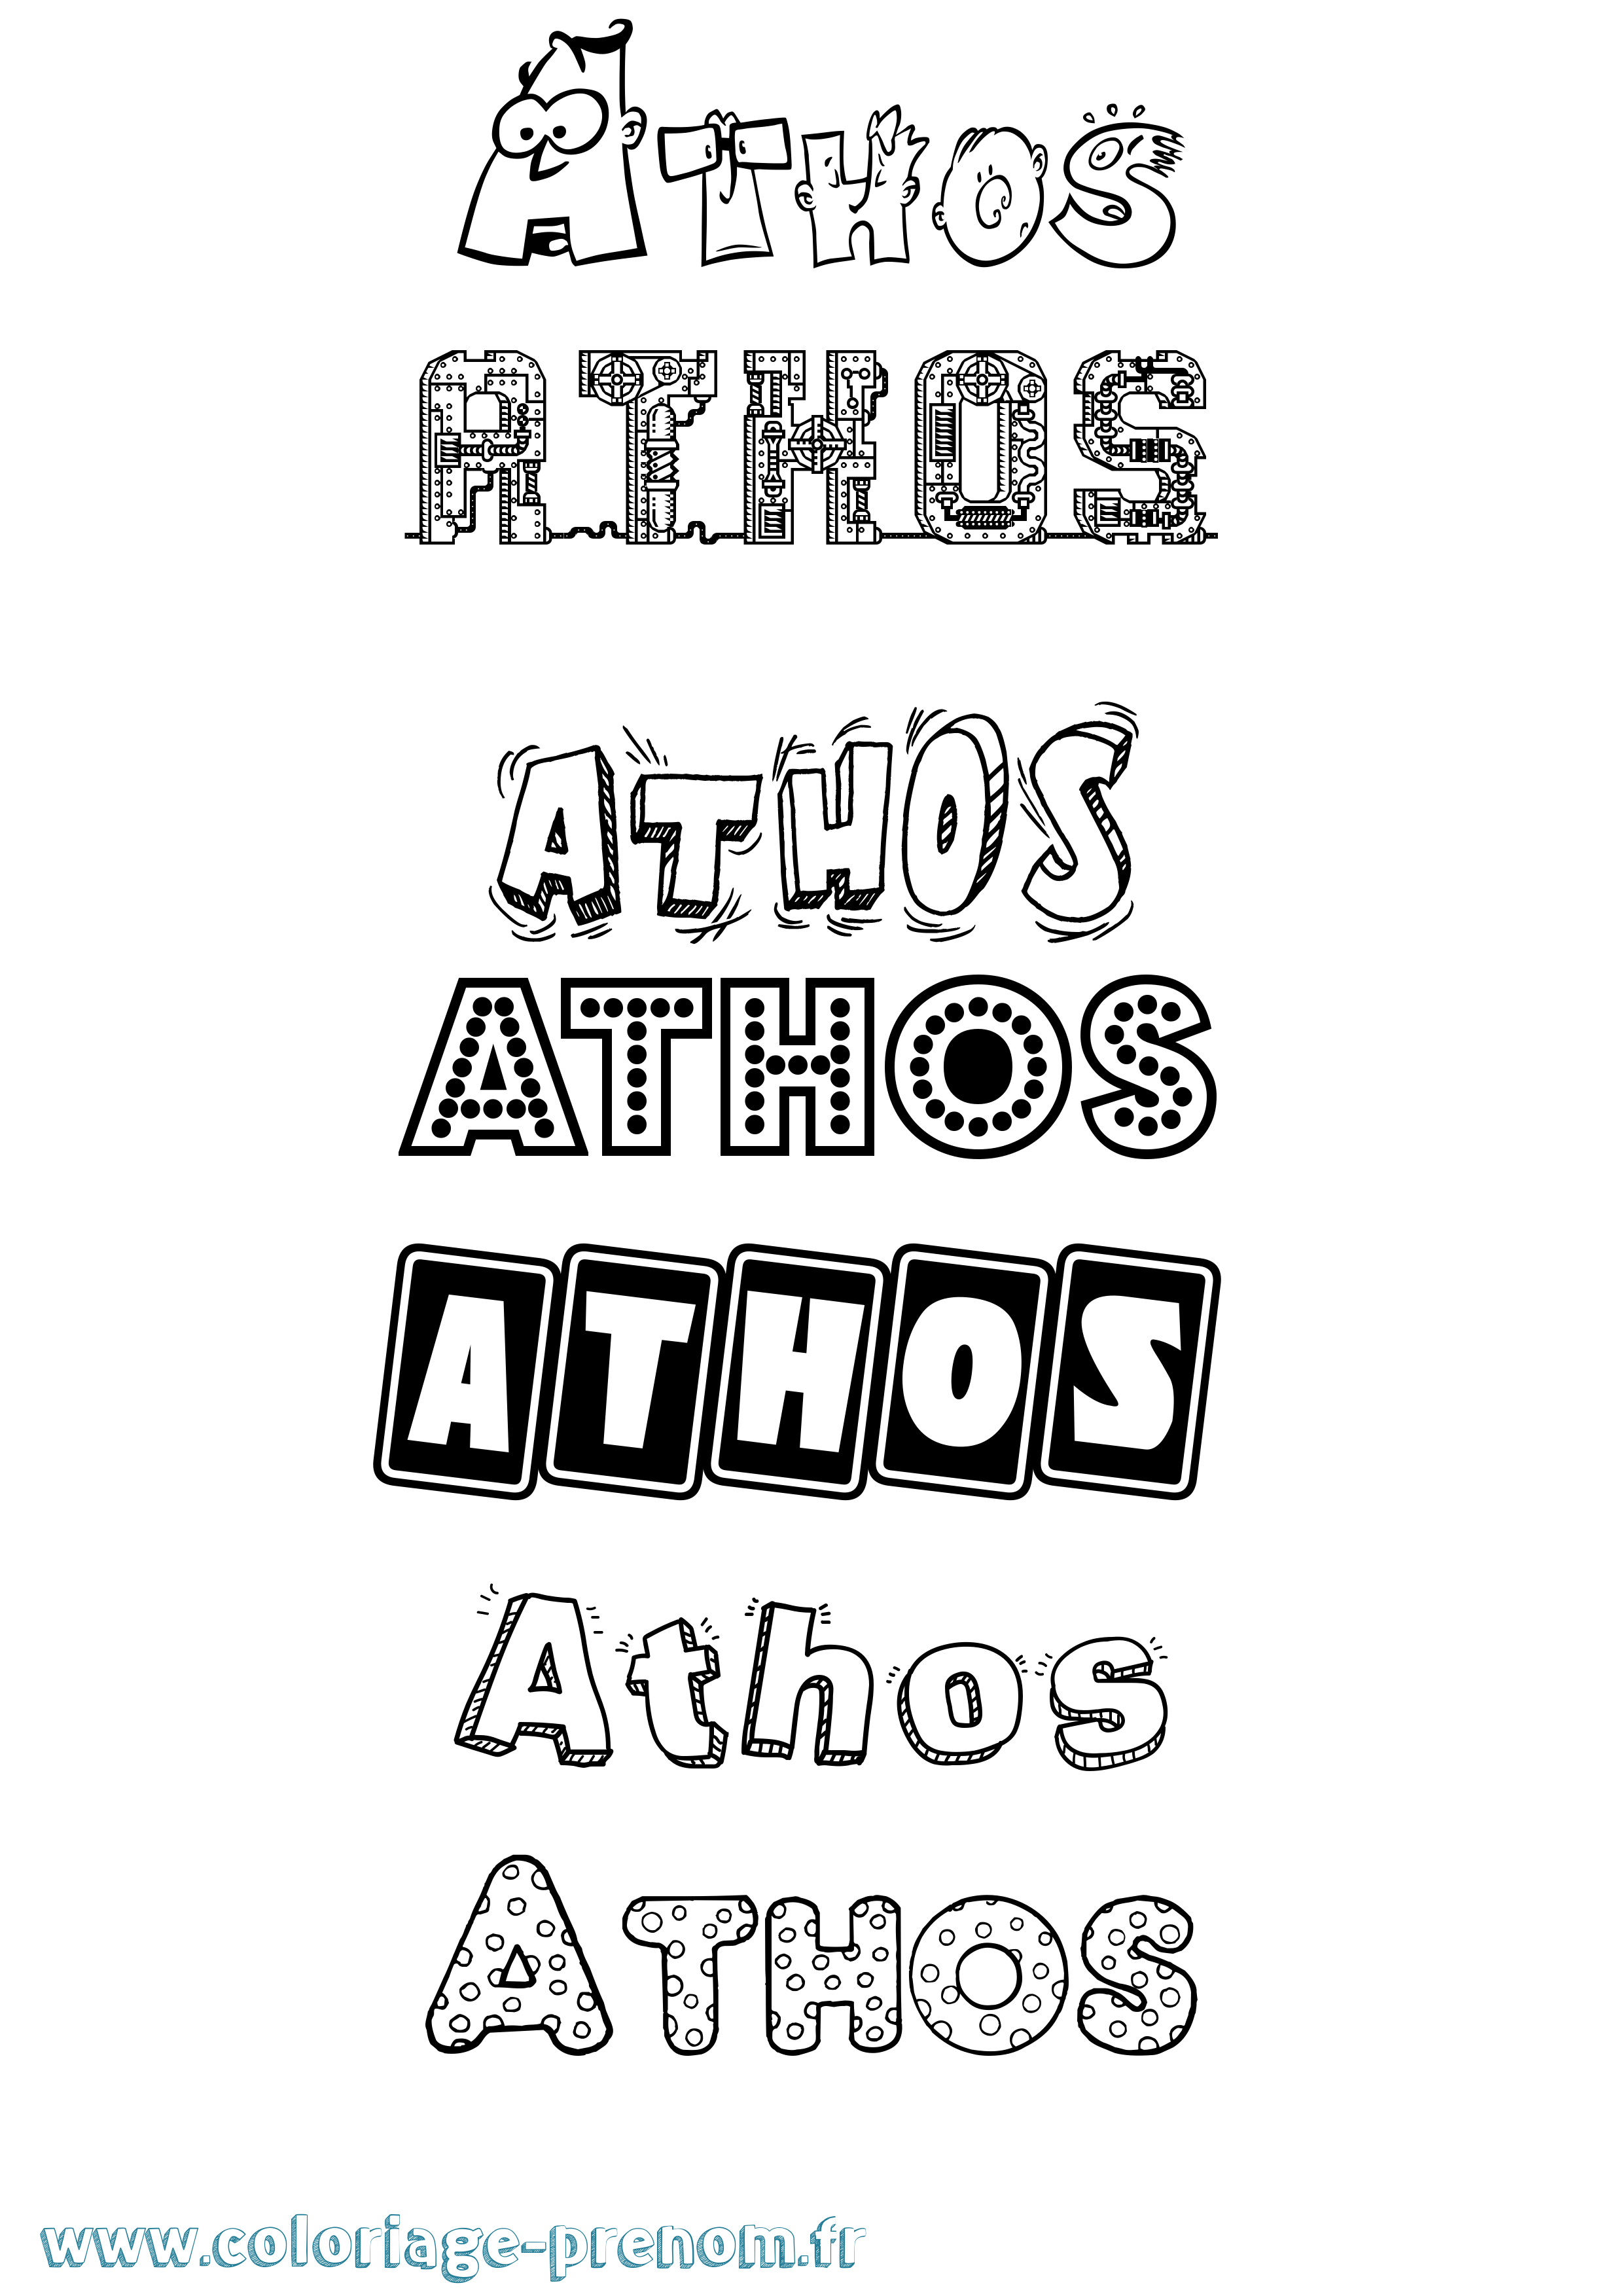 Coloriage prénom Athos Fun